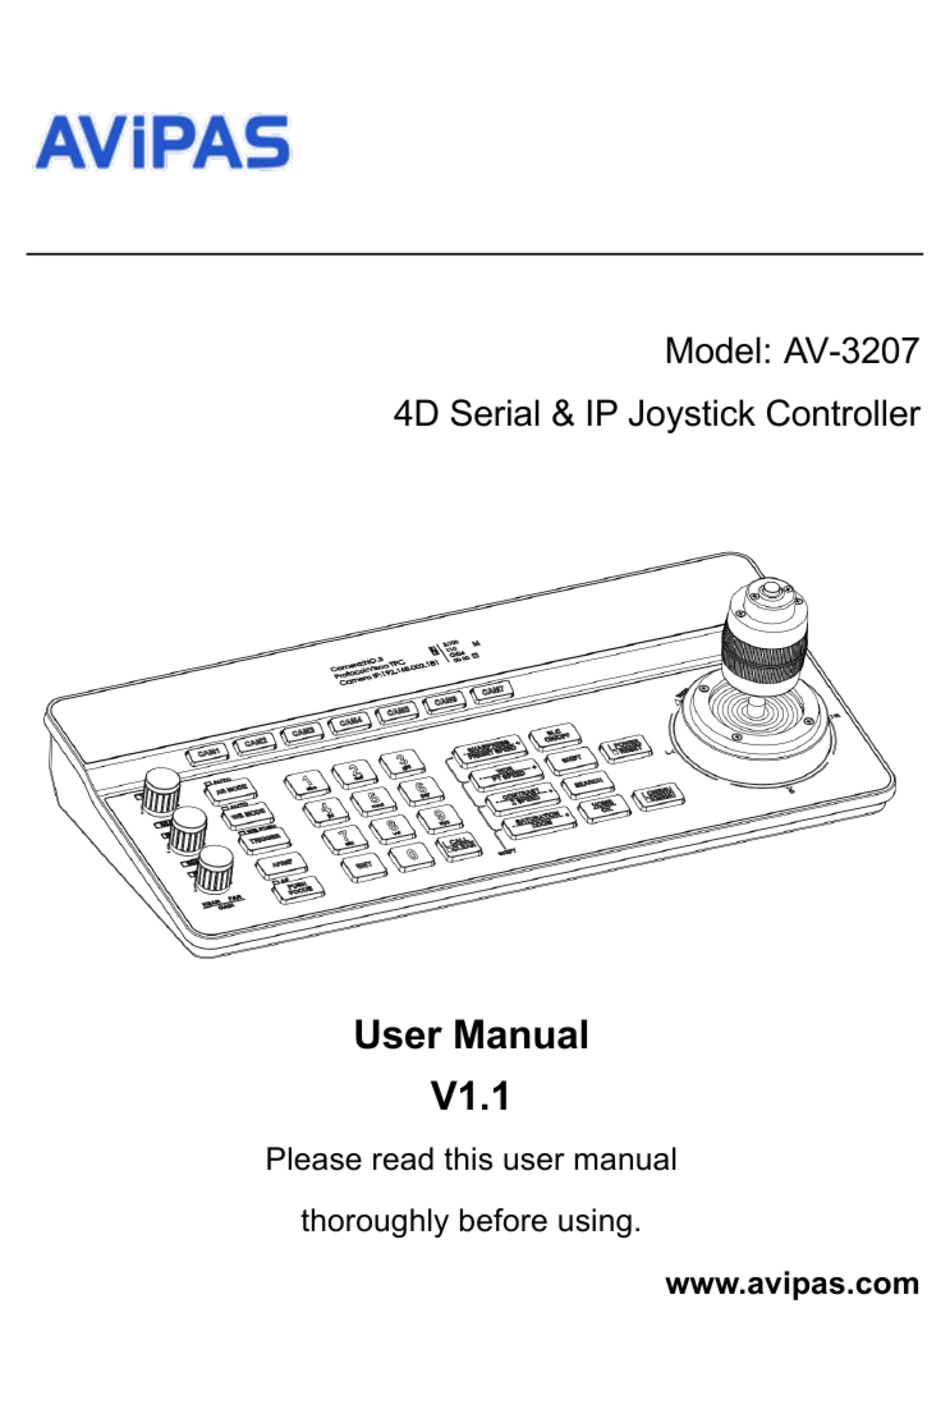 AVIPAS AV-3207 USER MANUAL Pdf Download | ManualsLib